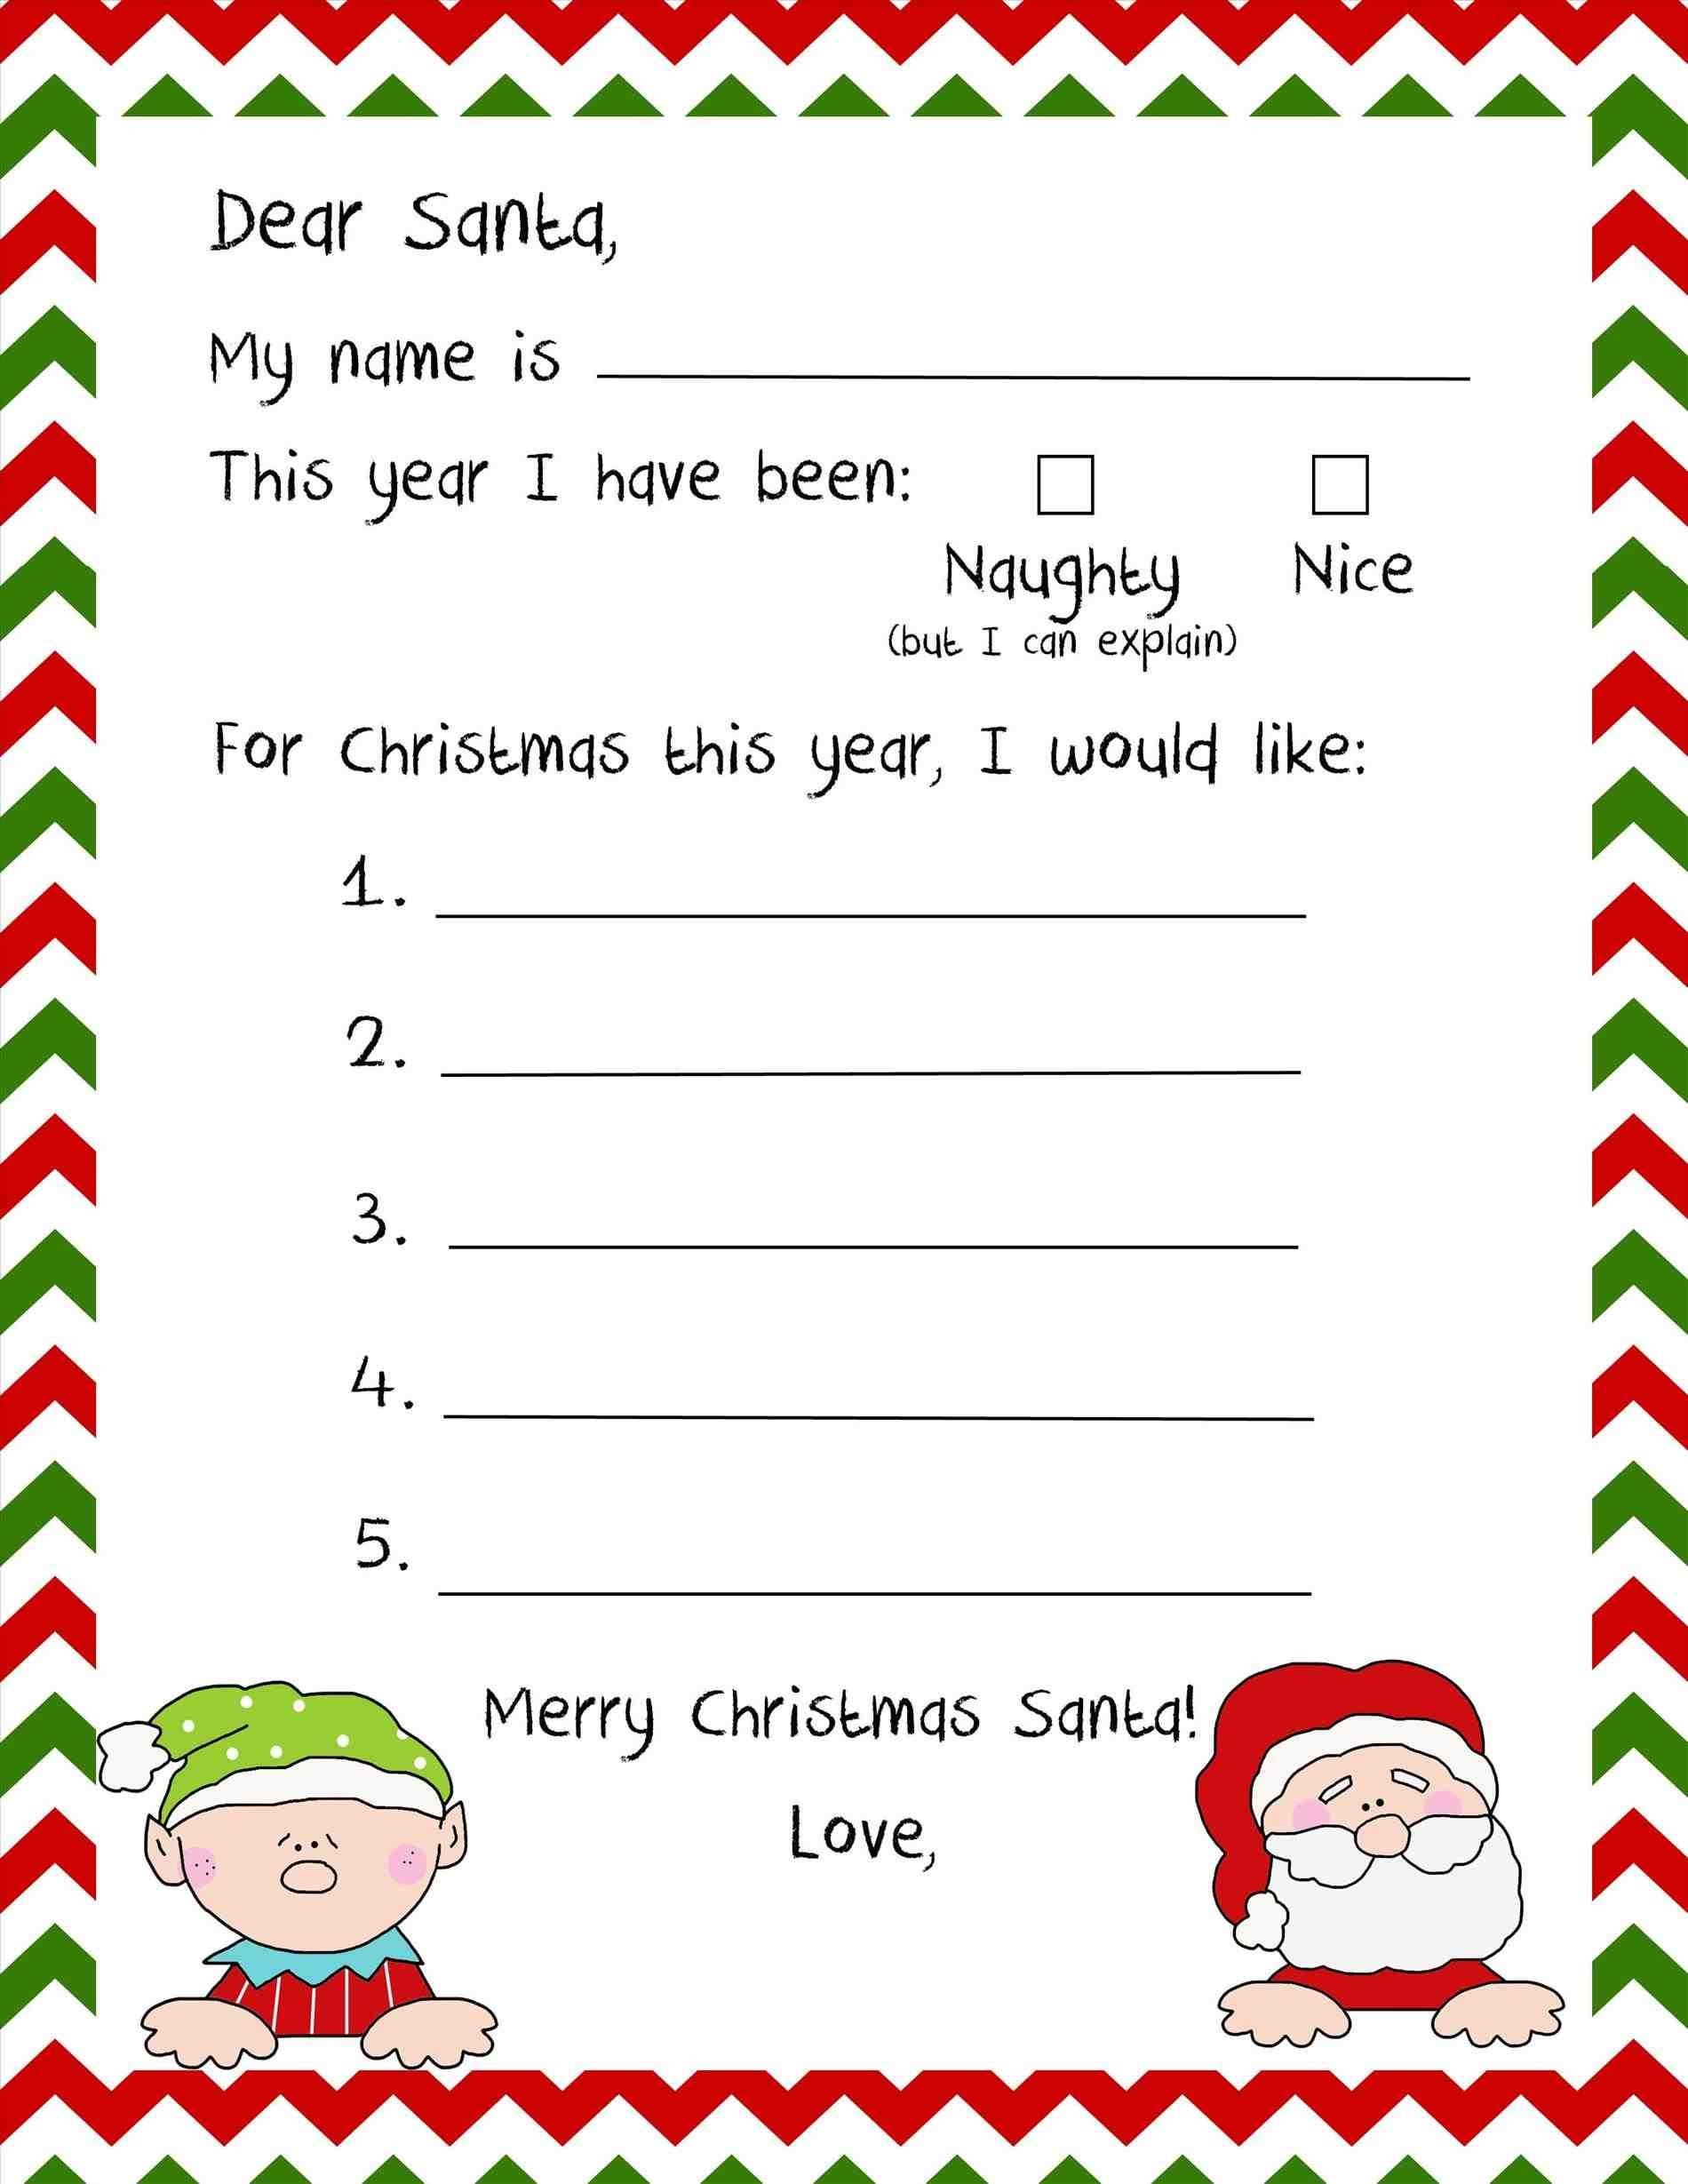 stationary-for-kids-to-write-santa-free-stationery-templates-deco-free-printable-elf